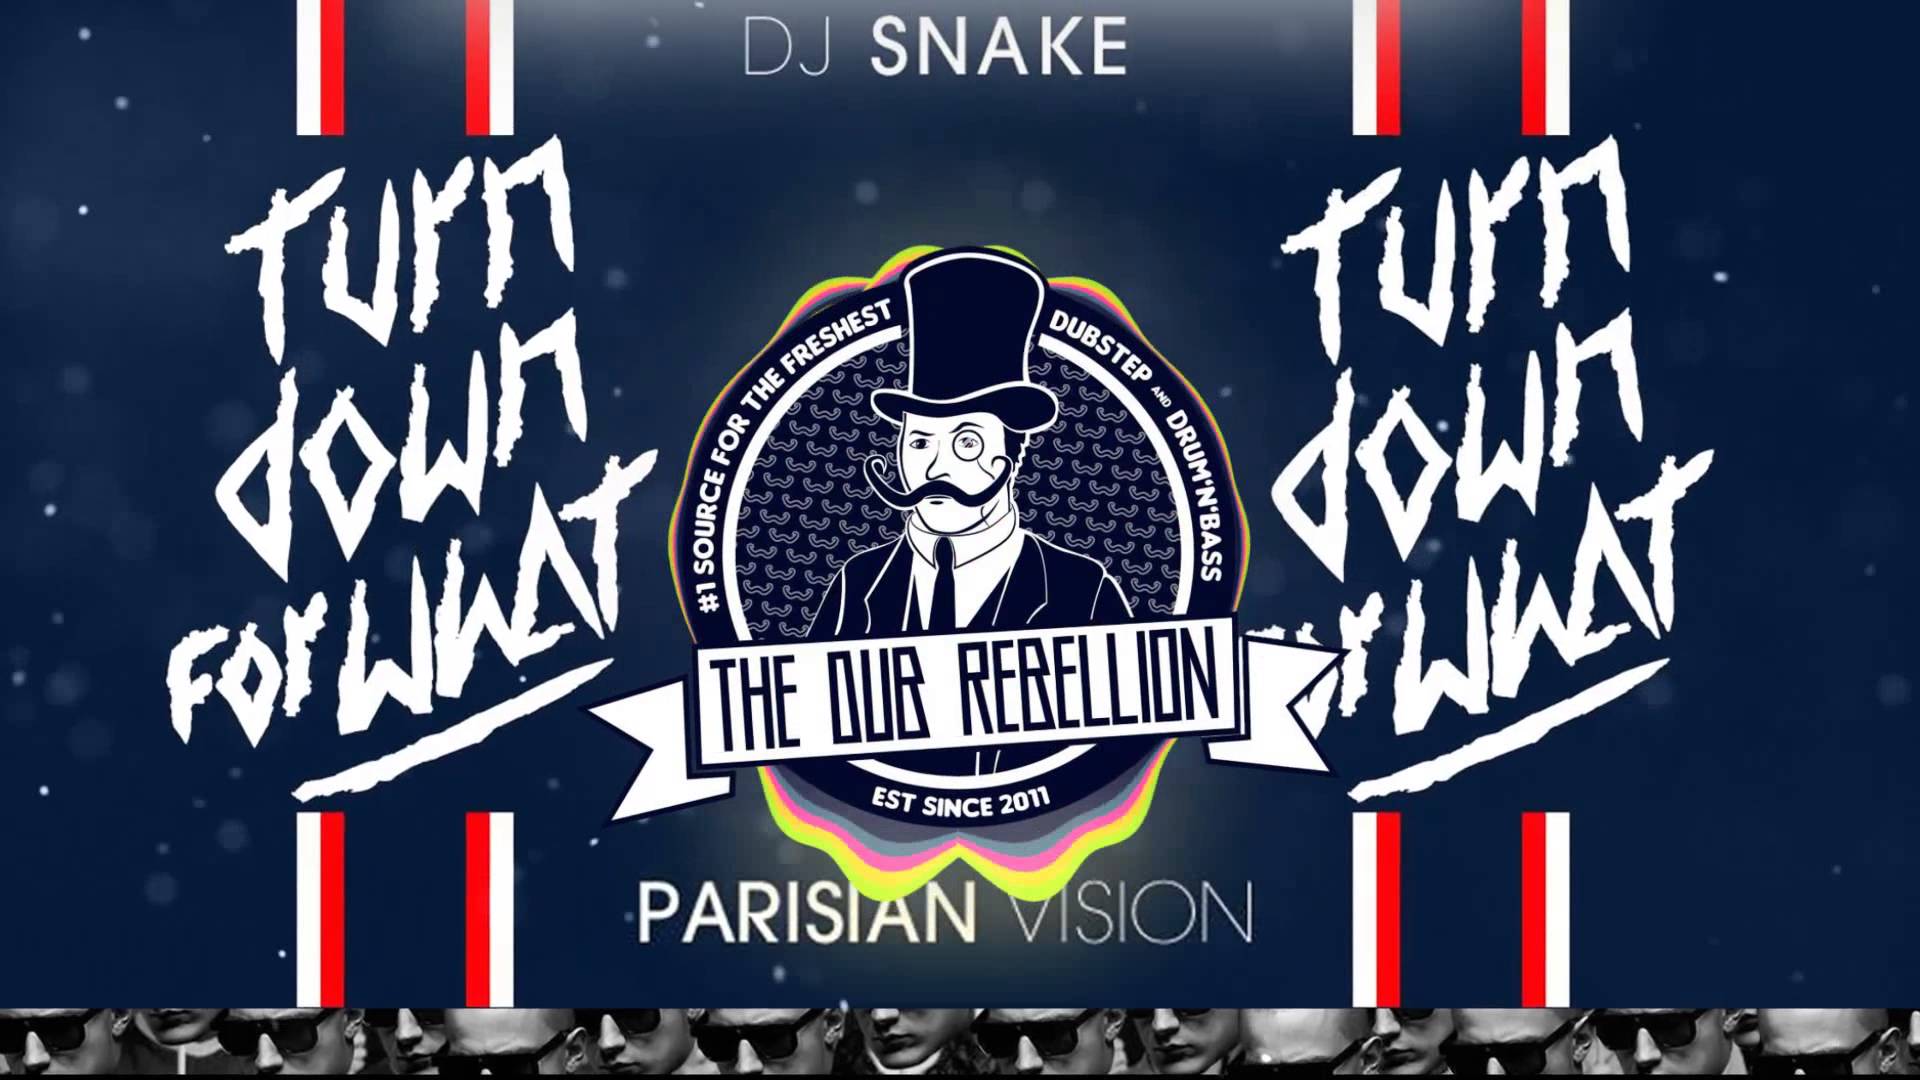 DJ Snake Wallpaper, HD Creative DJ Snake Image, Full HD Wallpaper